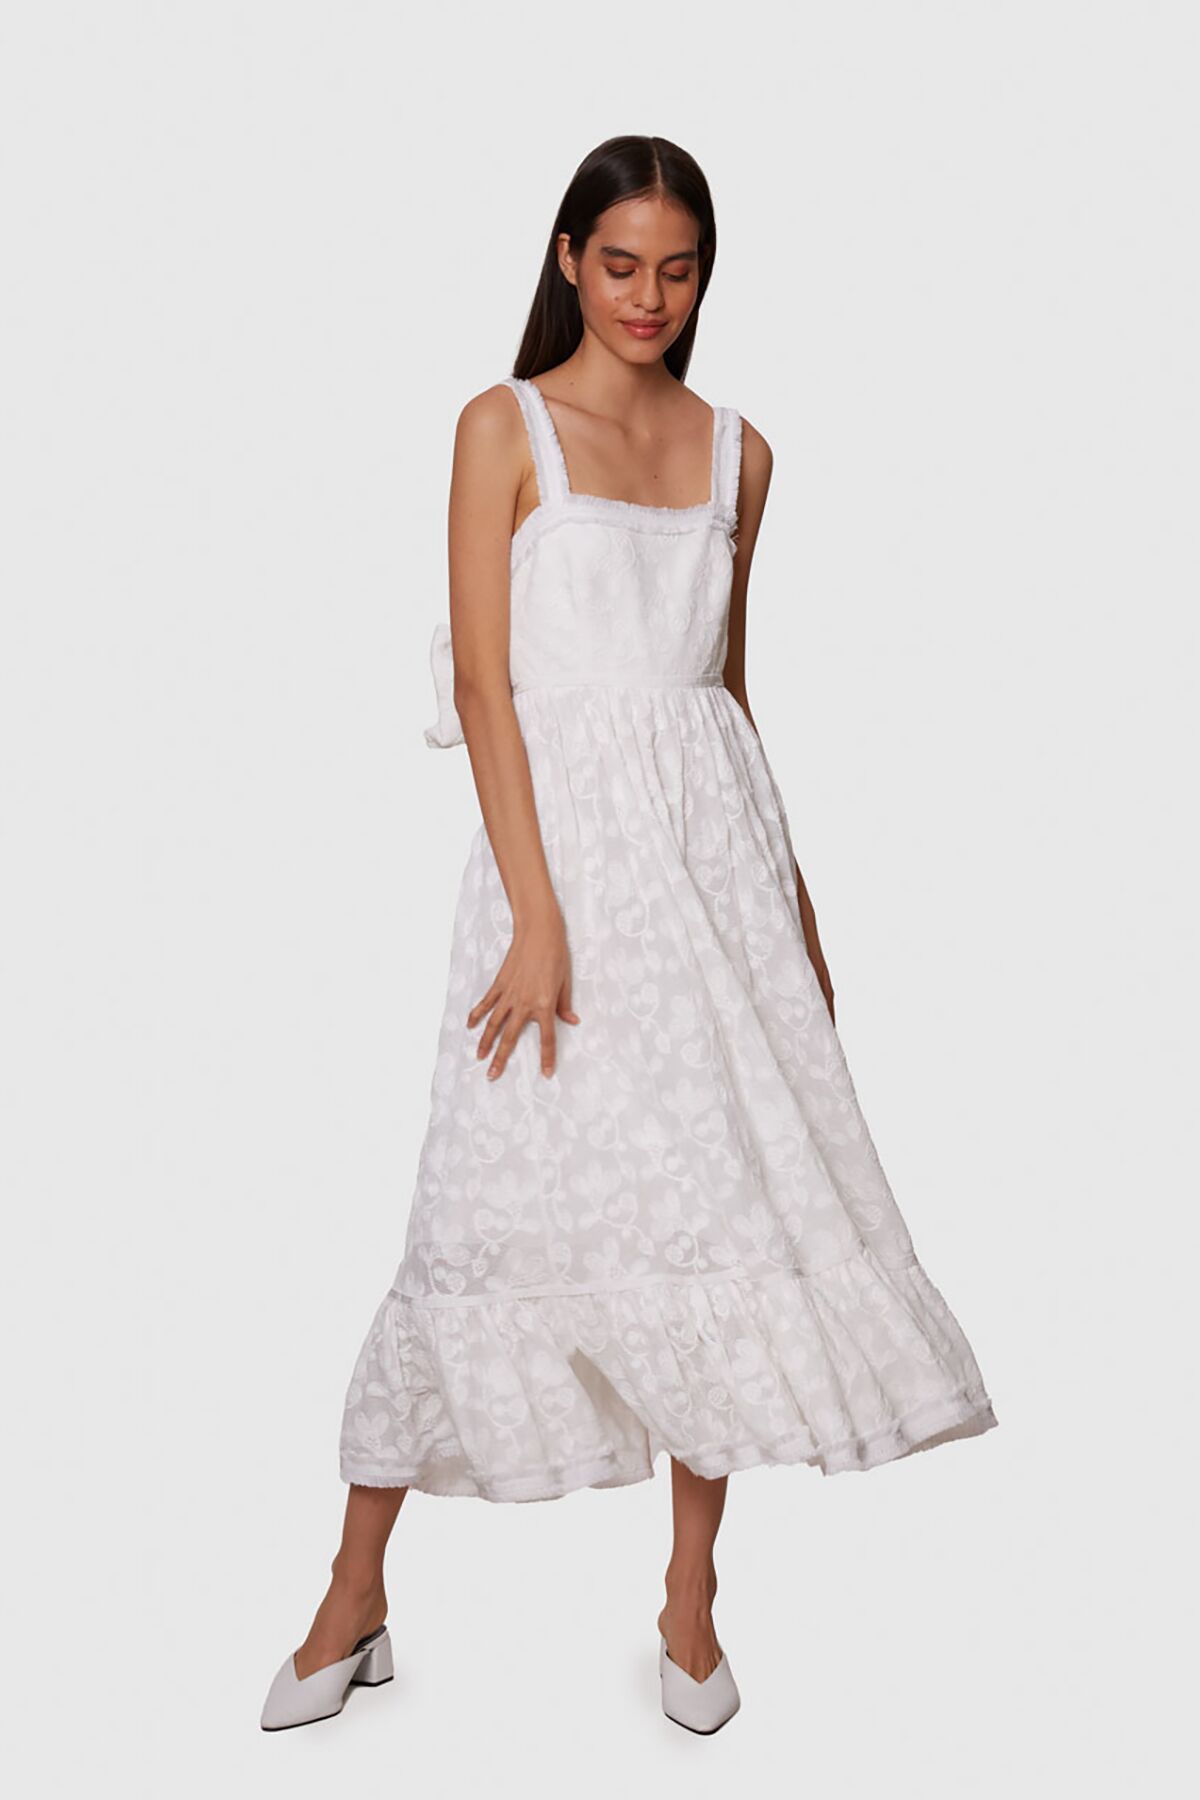 MANI MANI - Scallop Bow-Tie Detailed White Dress